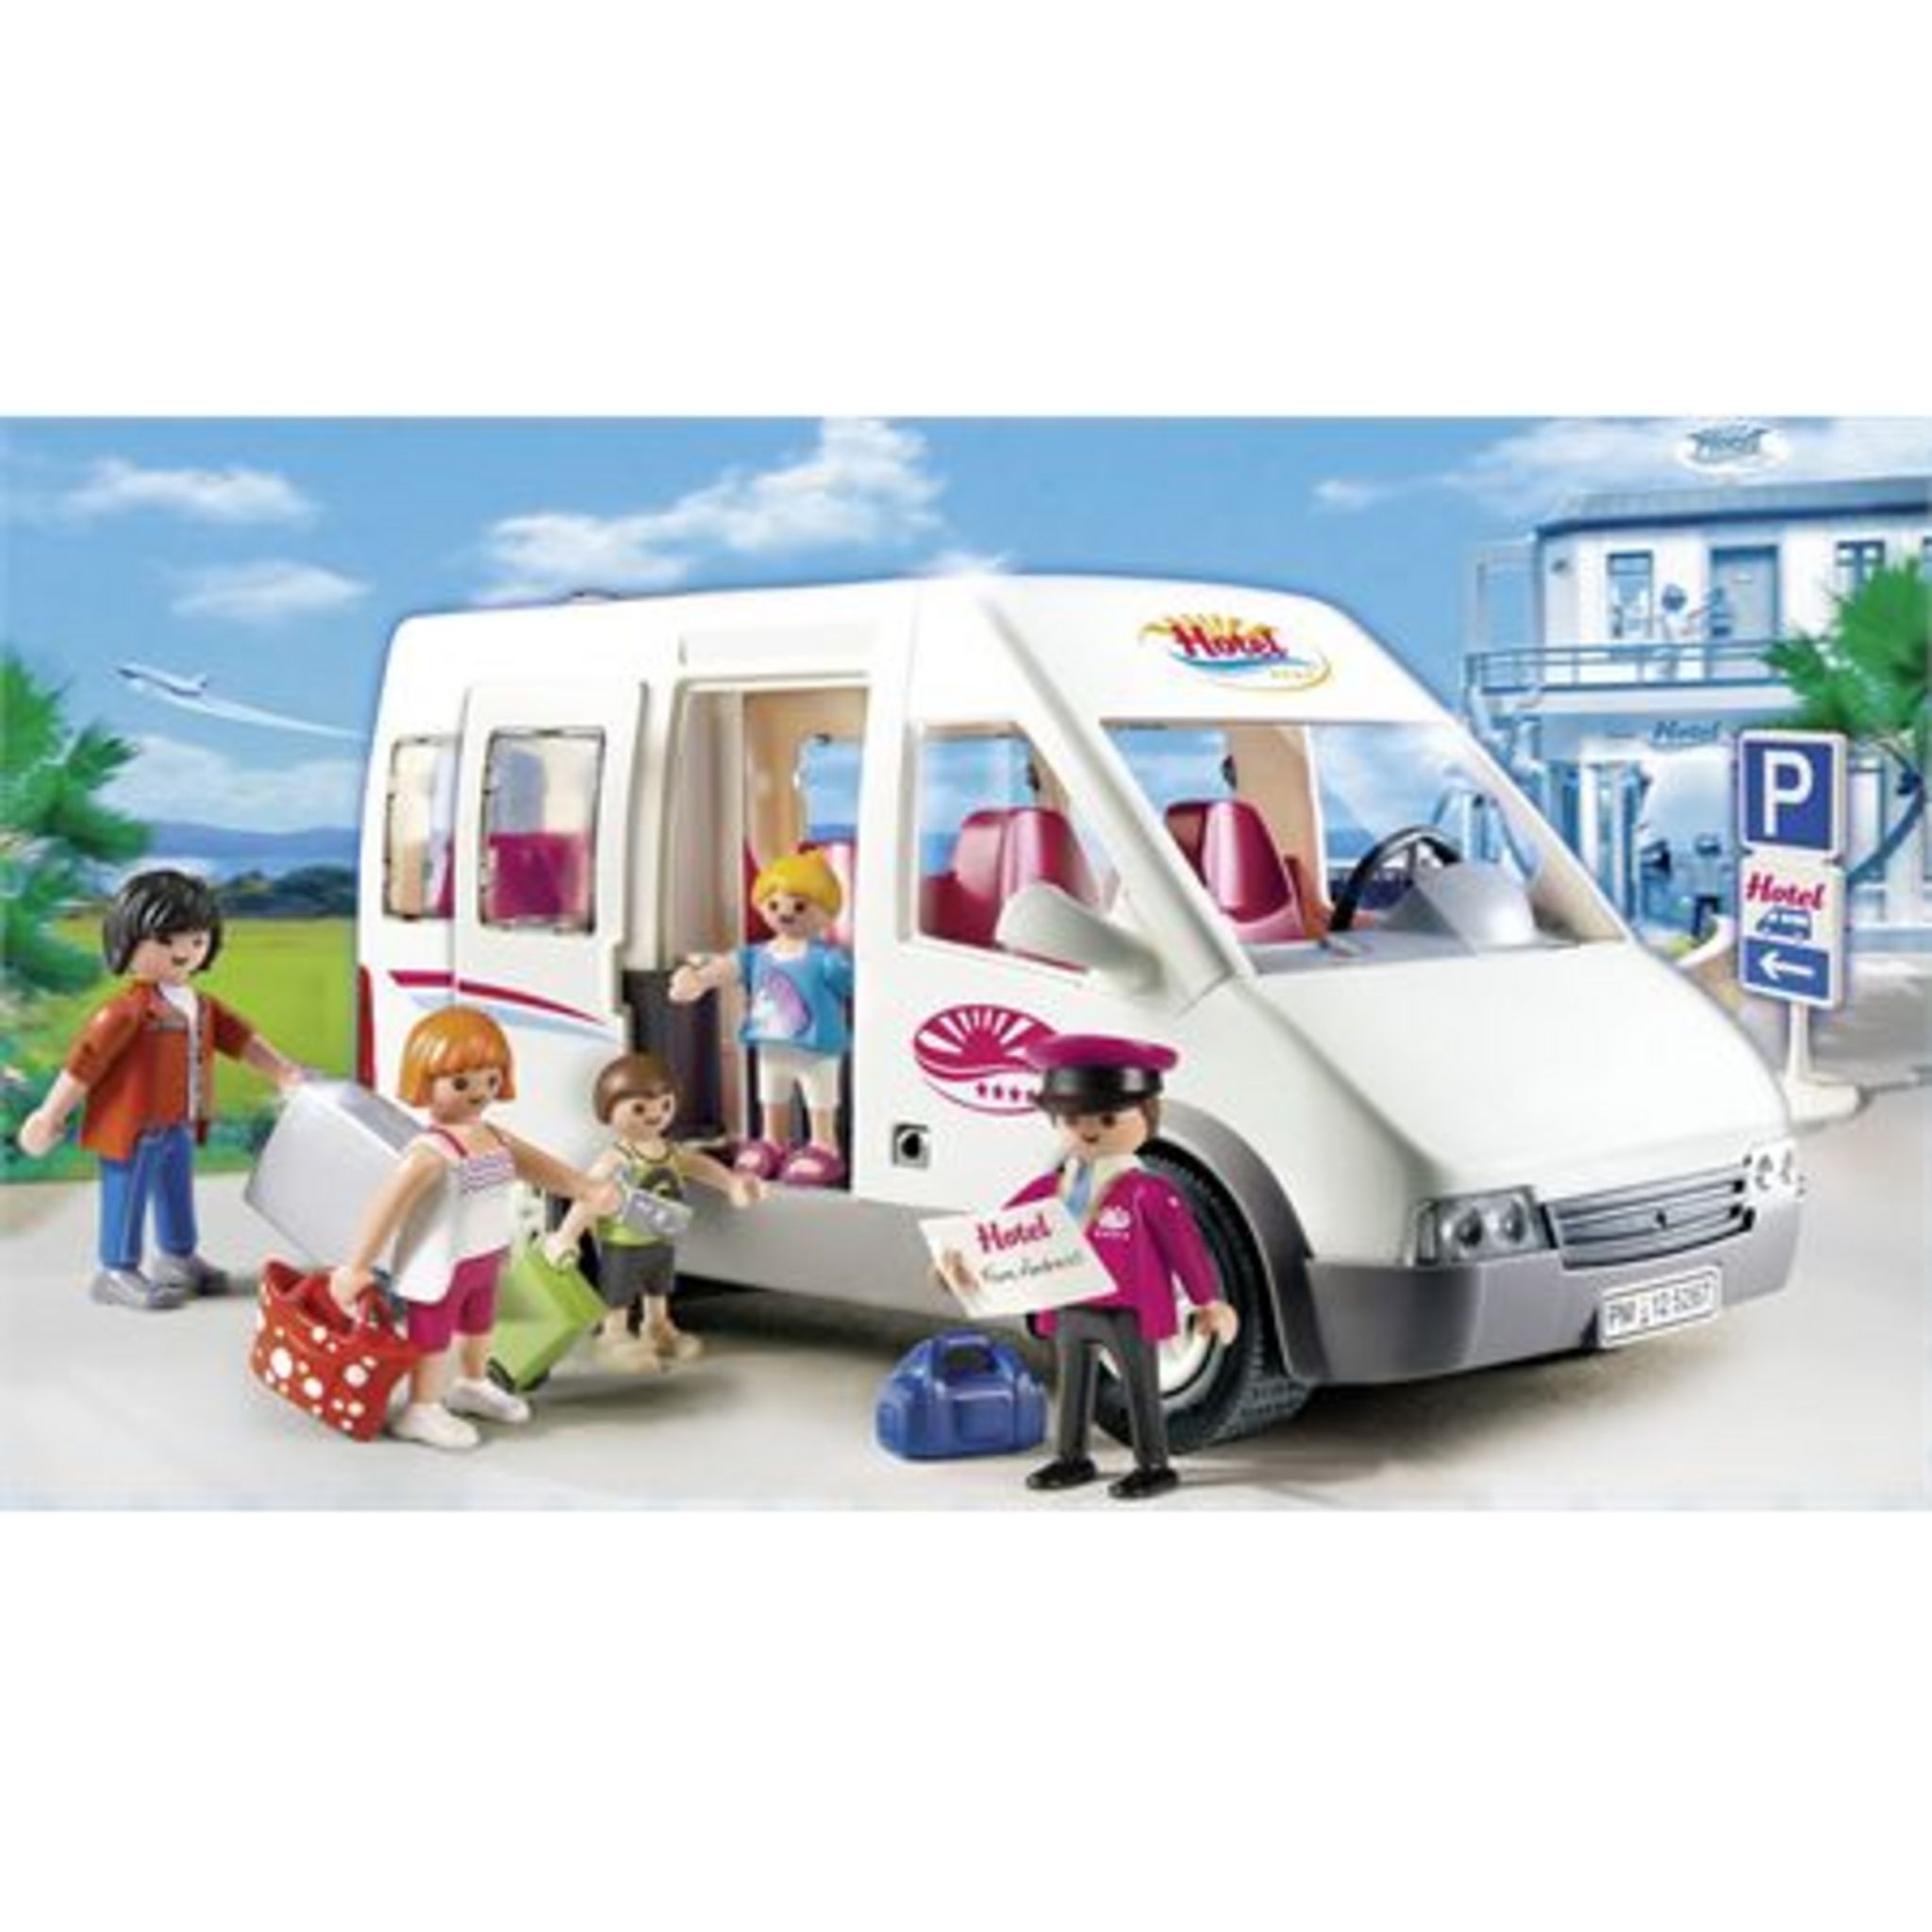 Hotel Shuttle Bus - Playmobil on Hollidays 5267